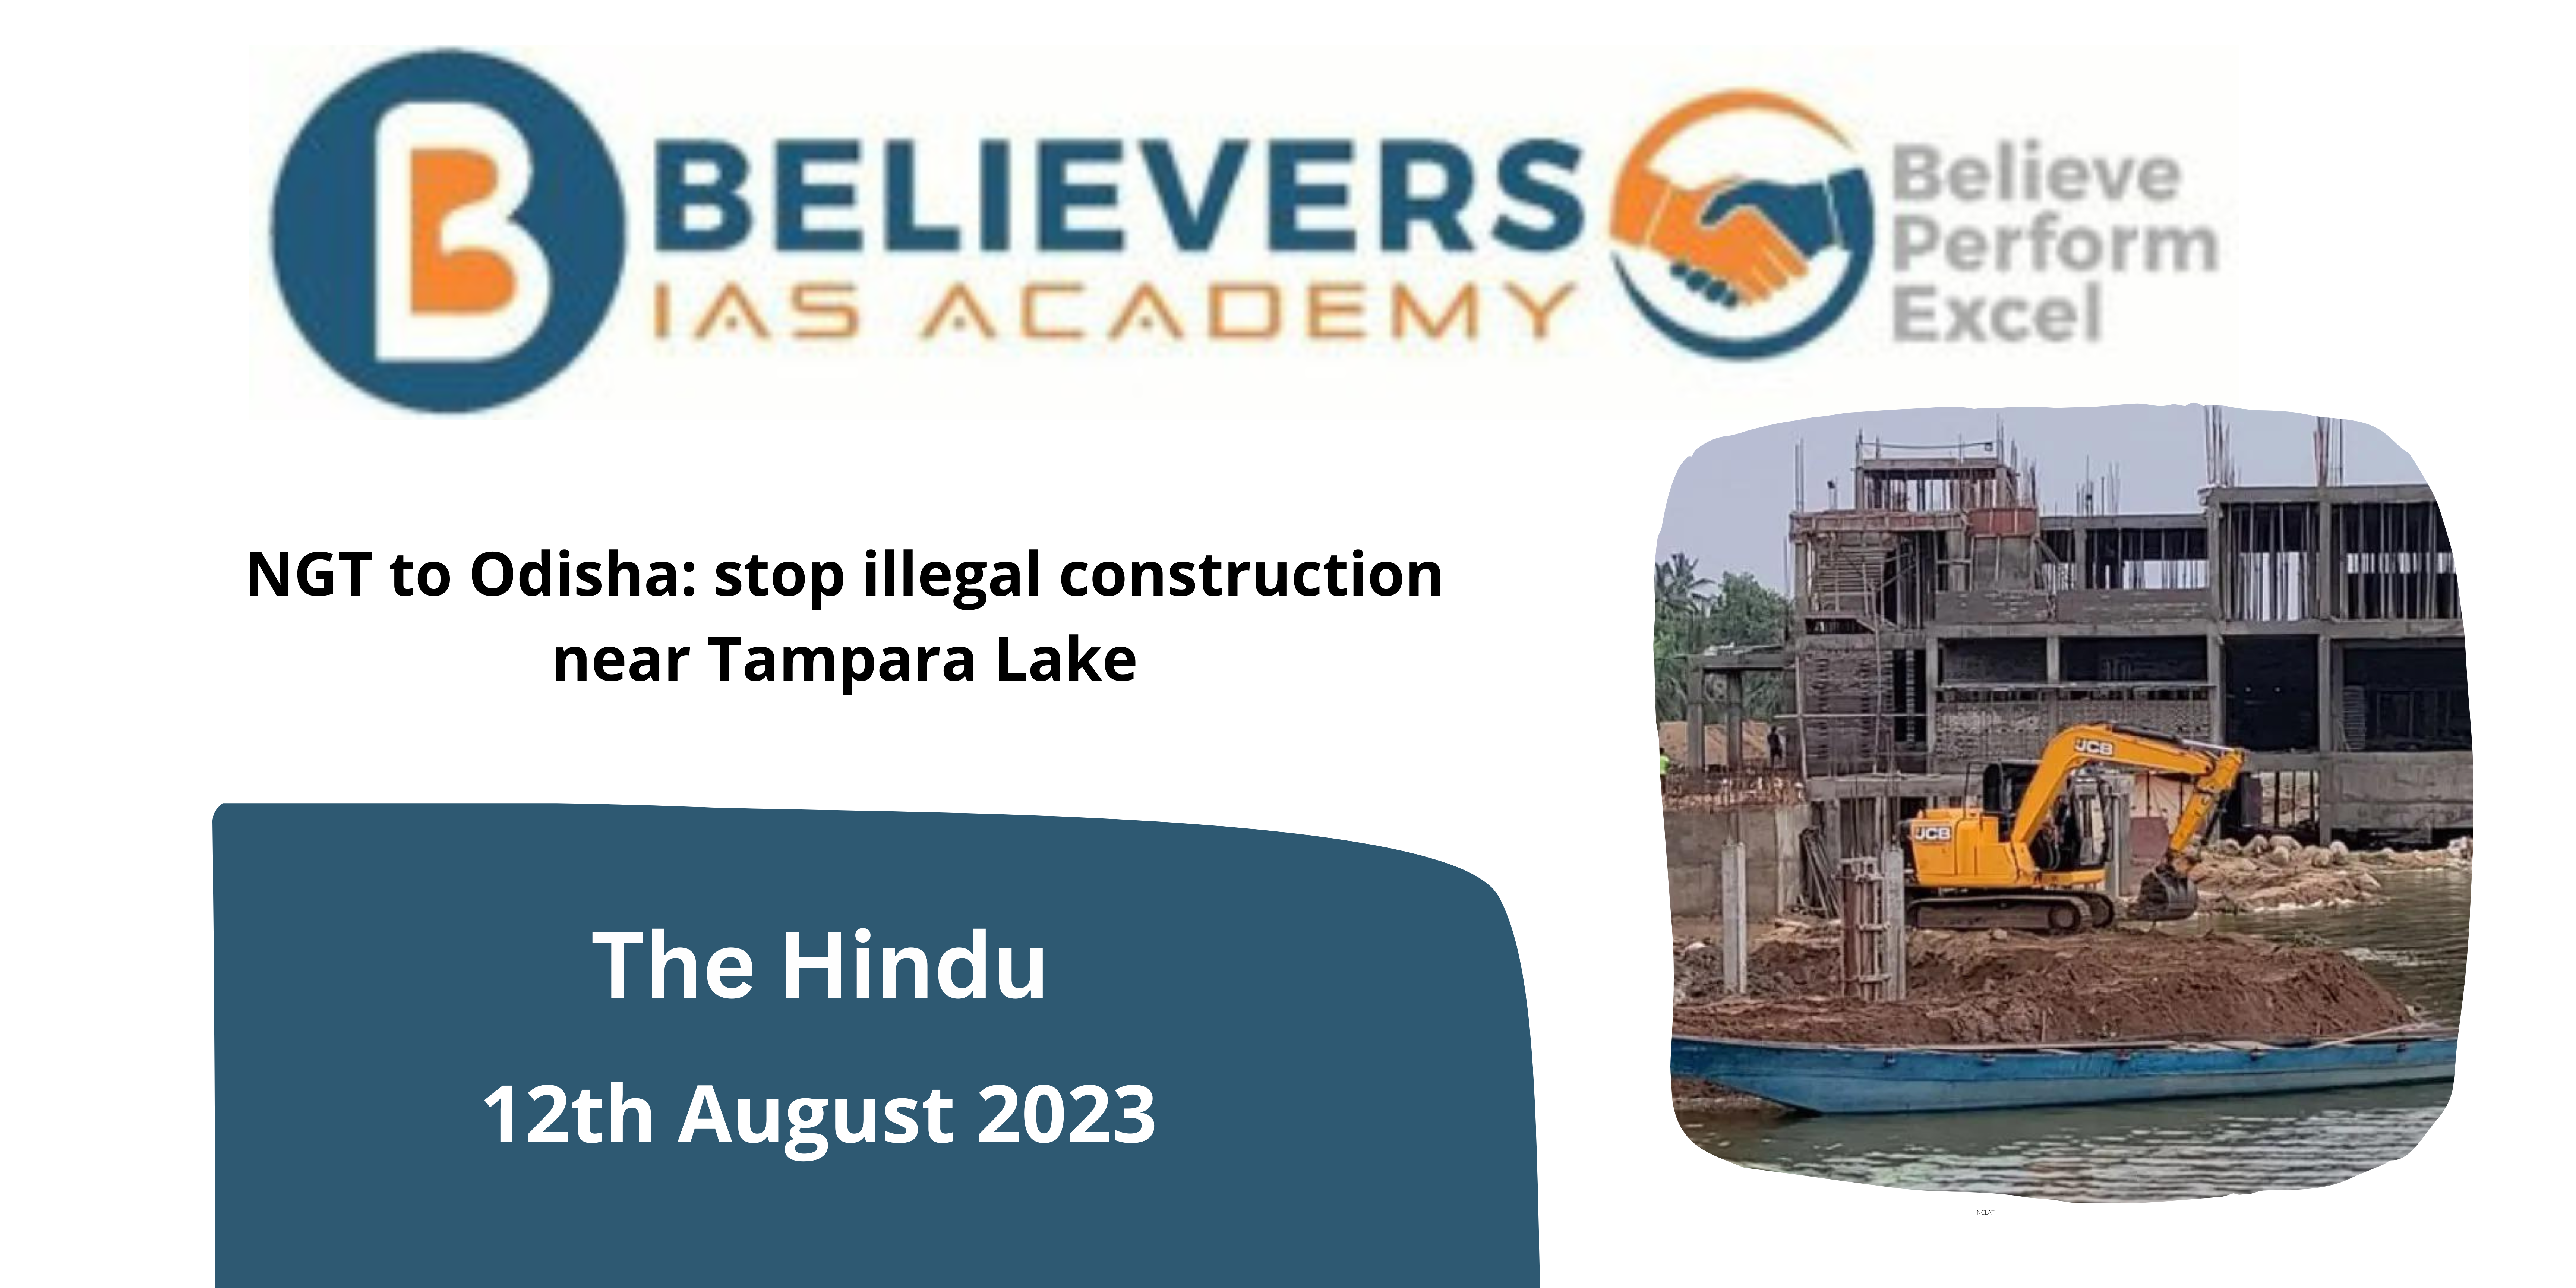 NGT to Odisha: stop illegal construction near Tampara Lake